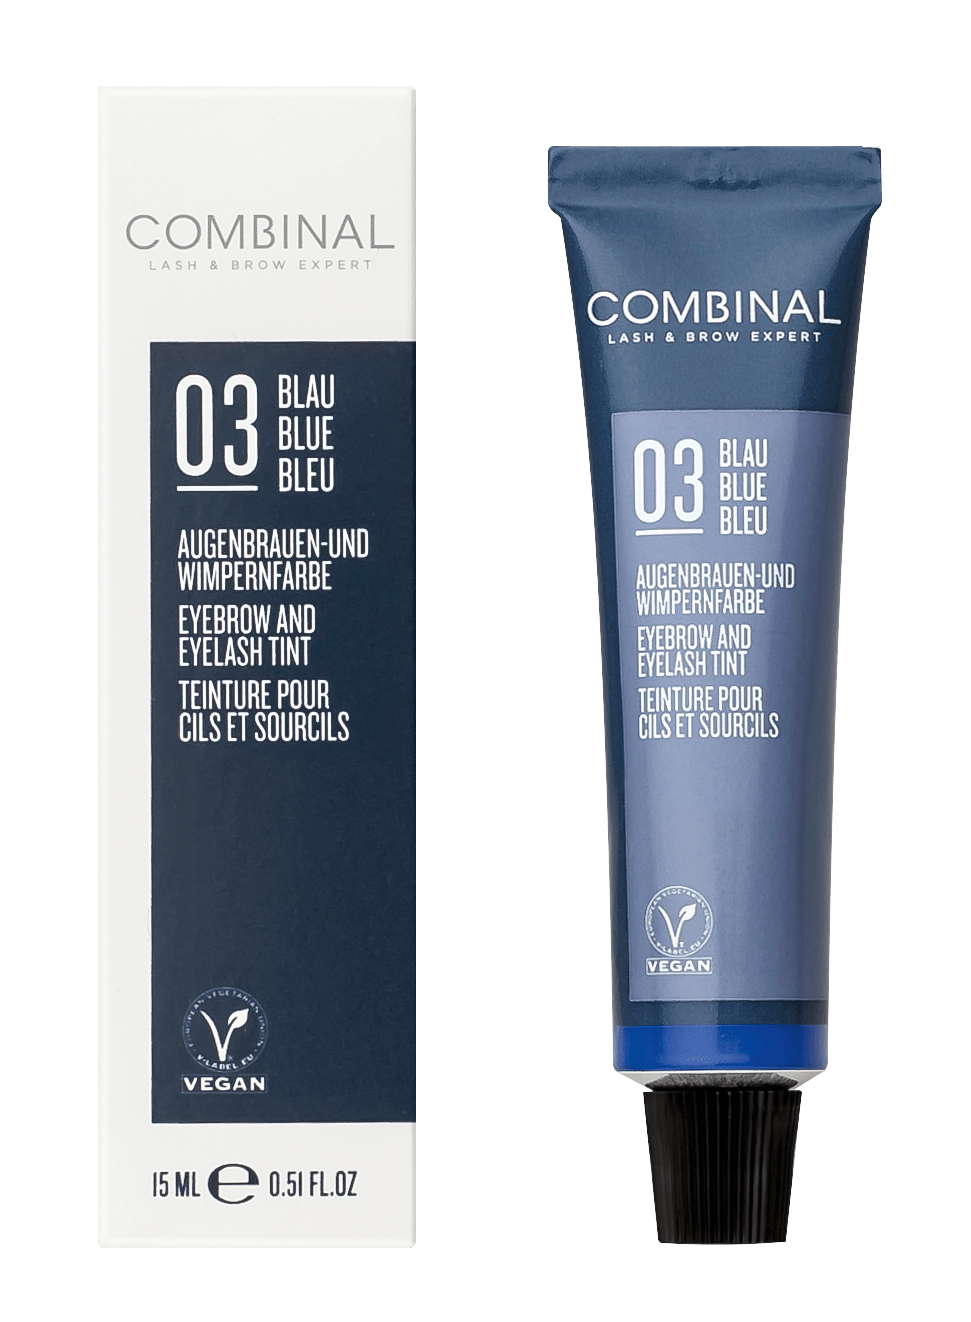 COMBINAL - Wimpernfarbe, 15 ml in blau